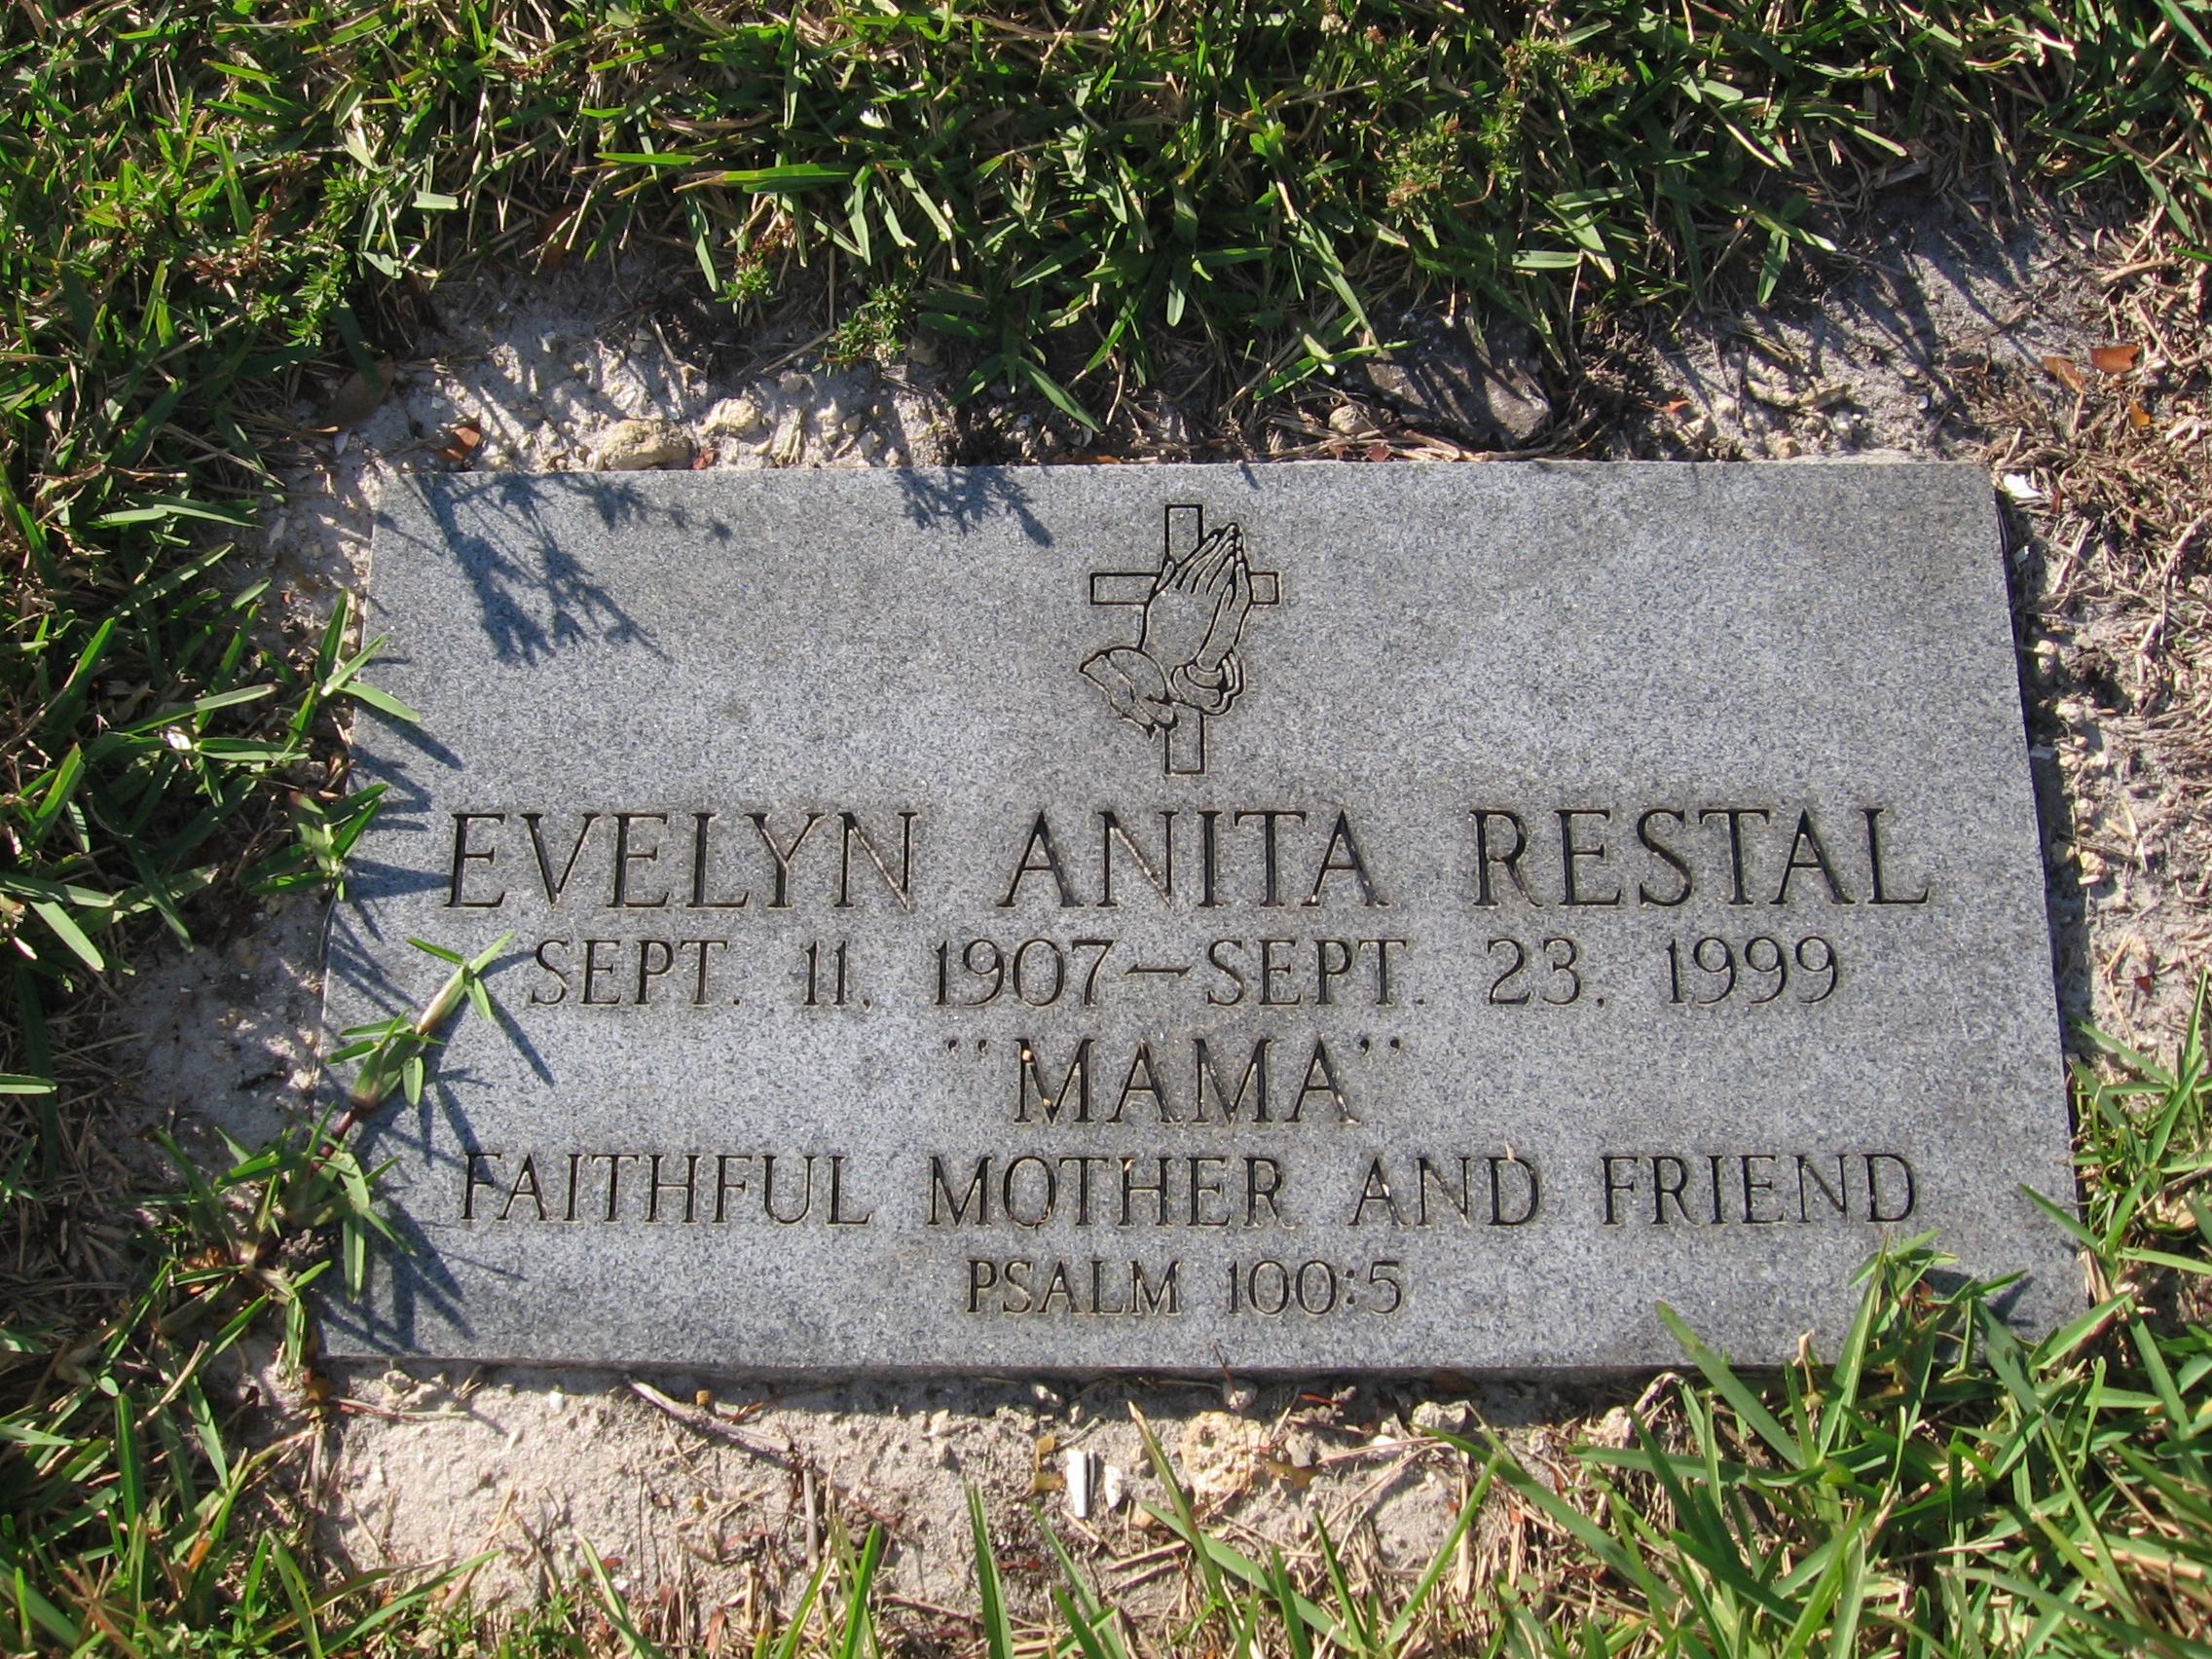 Evelyn Anita Restal